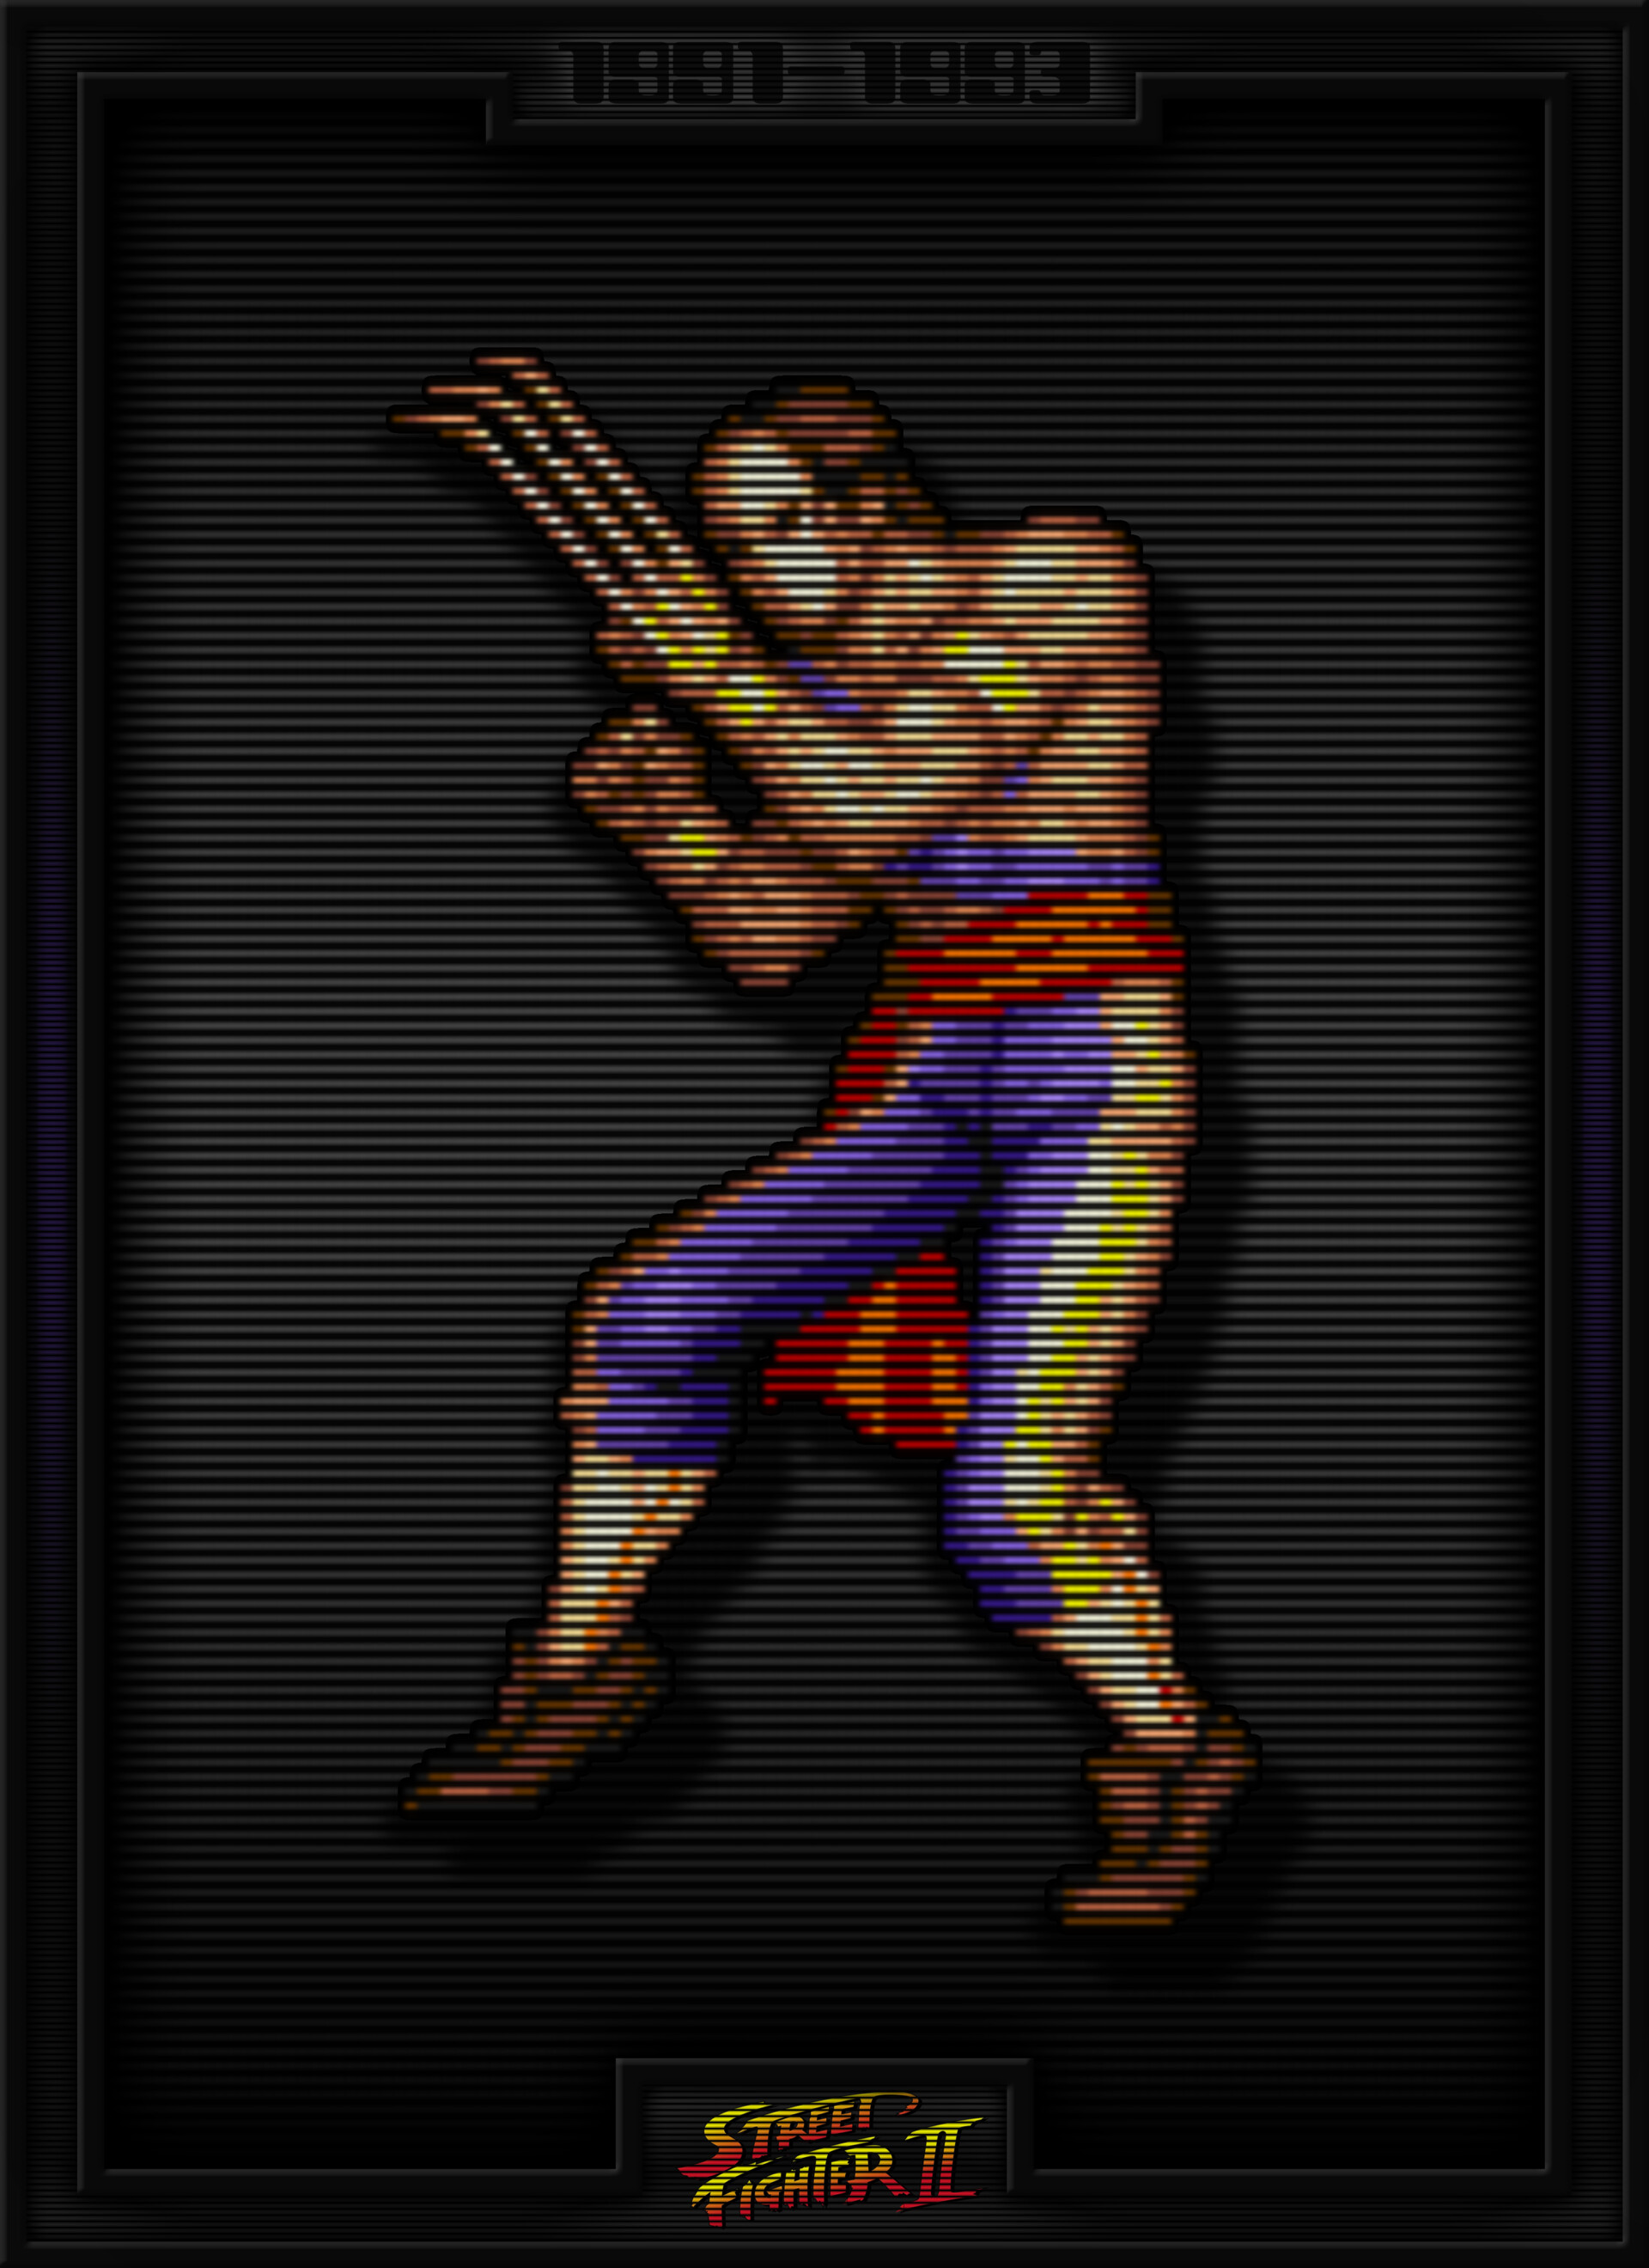 Vega (Street Fighter II) by Bronxboy79 on DeviantArt